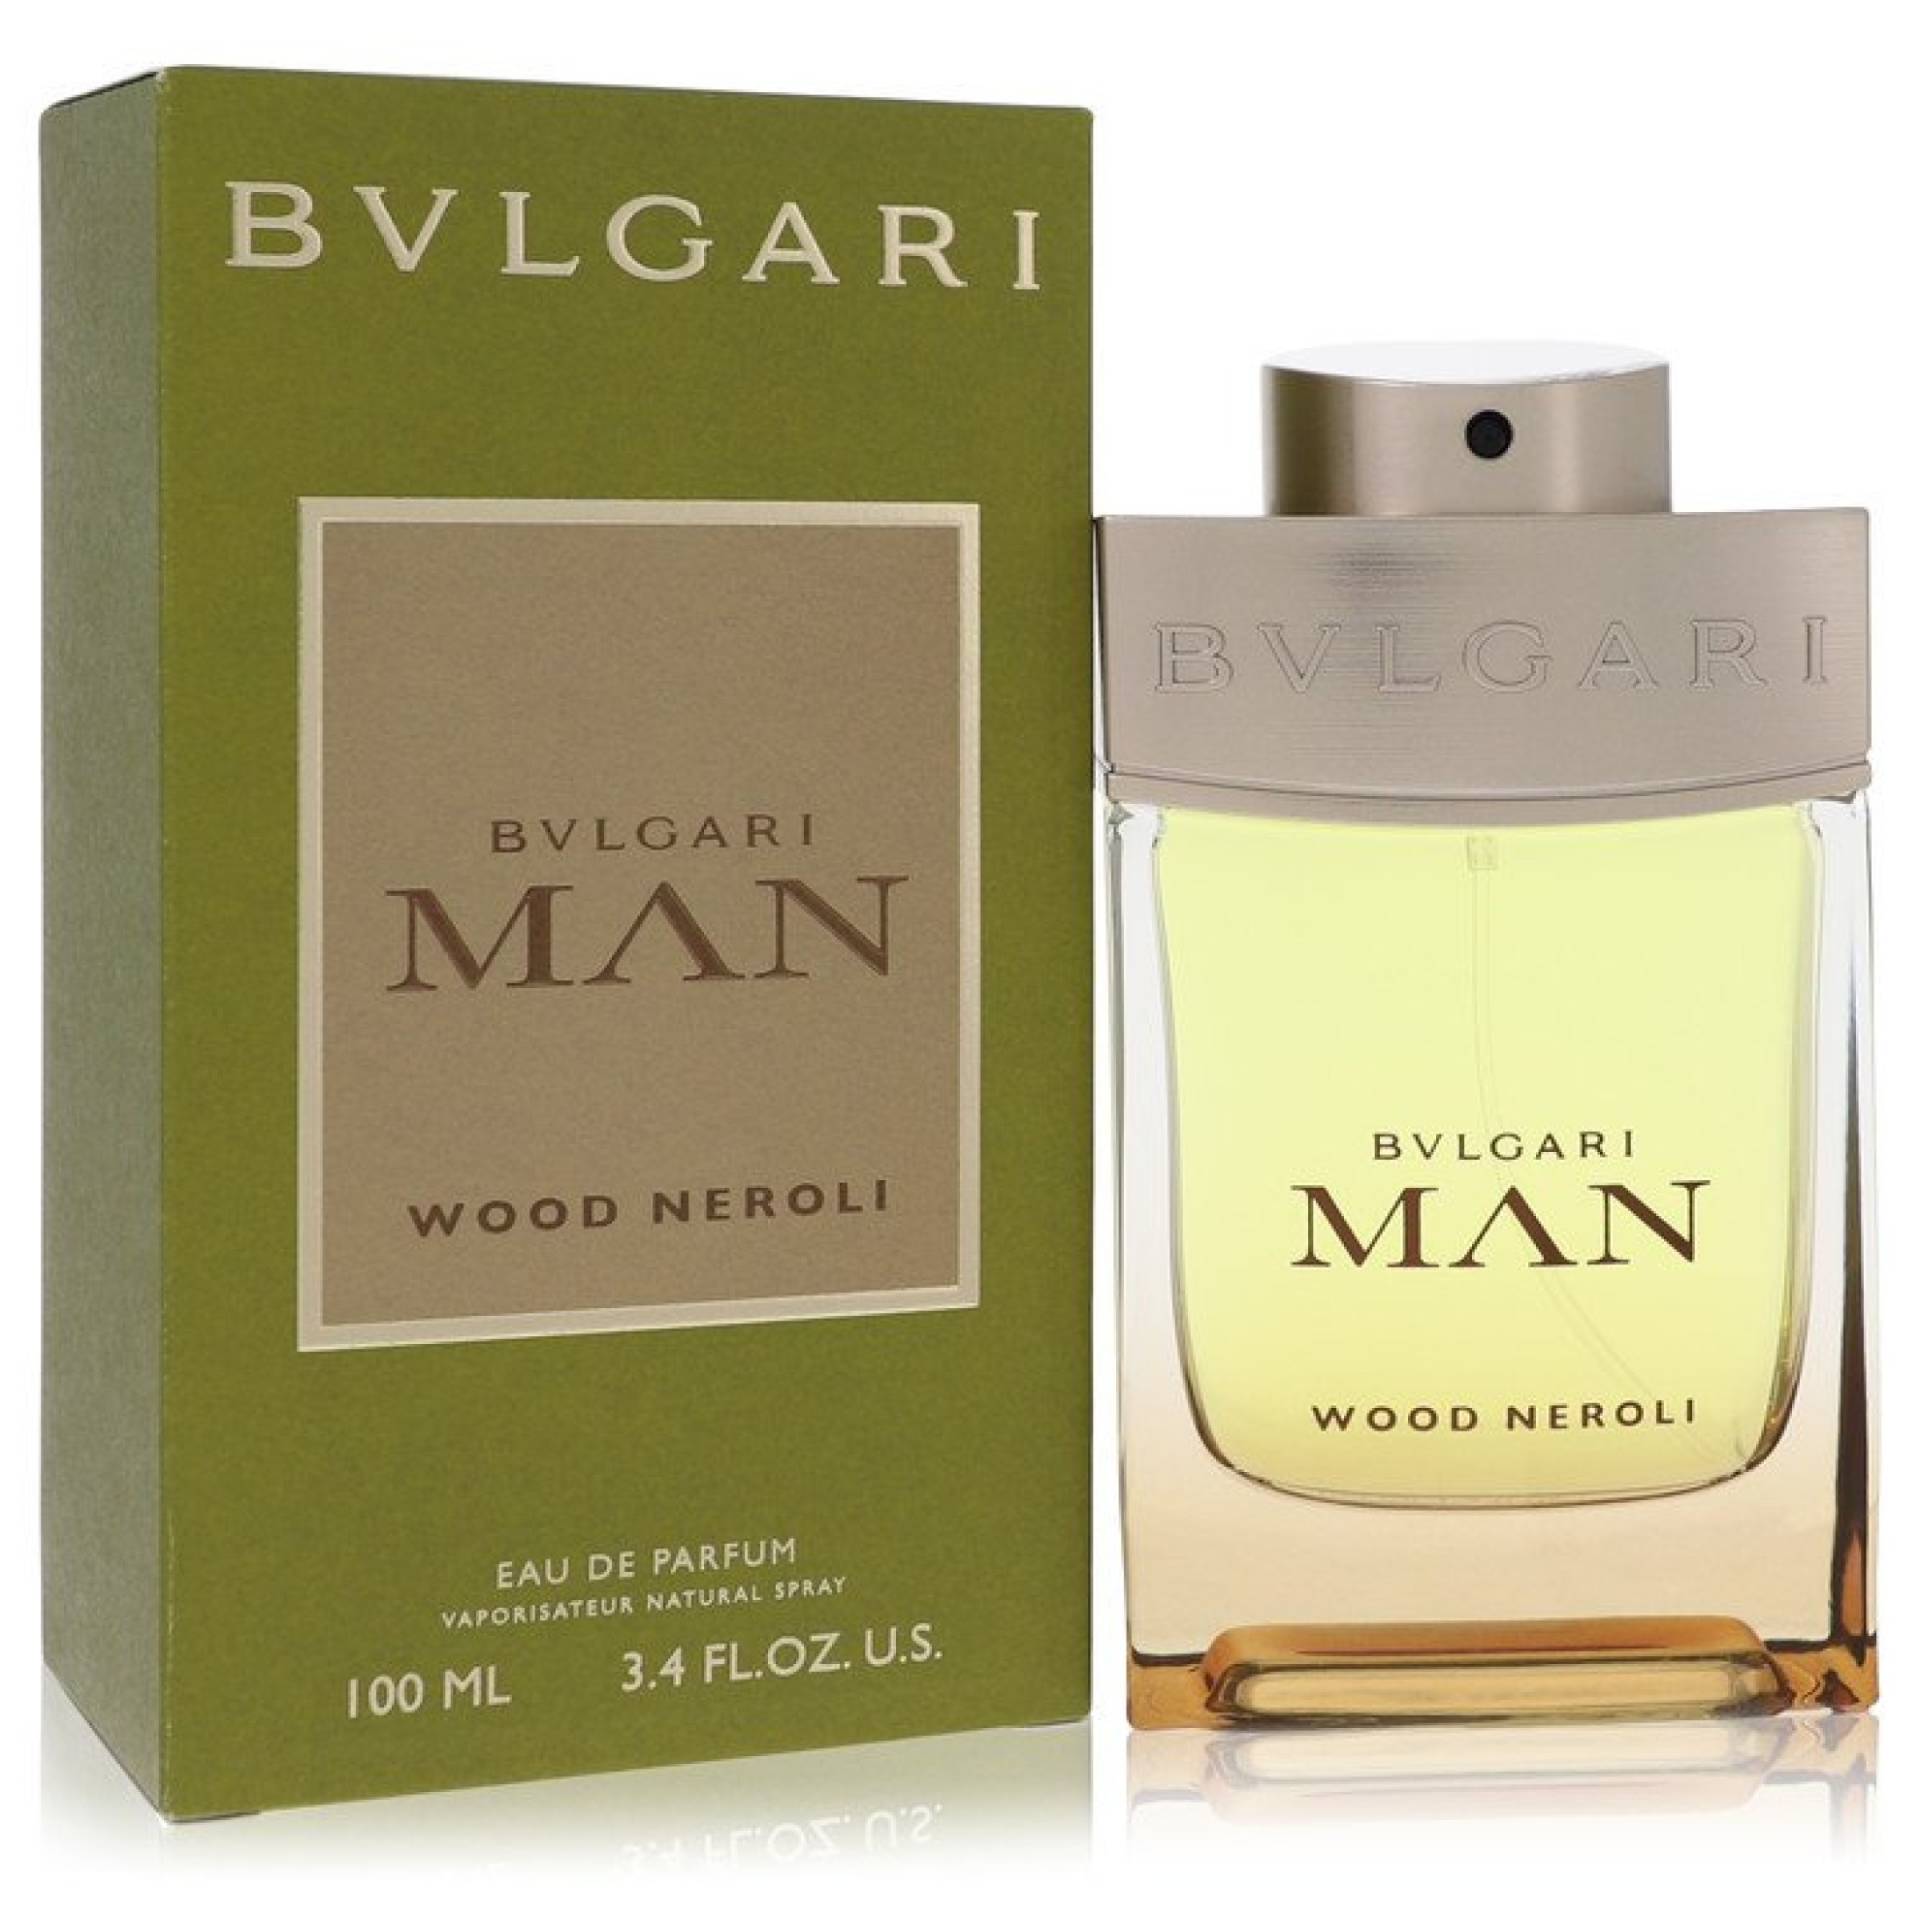 Bvlgari Man Wood Neroli Eau De Parfum Spray 100 ml von Bvlgari